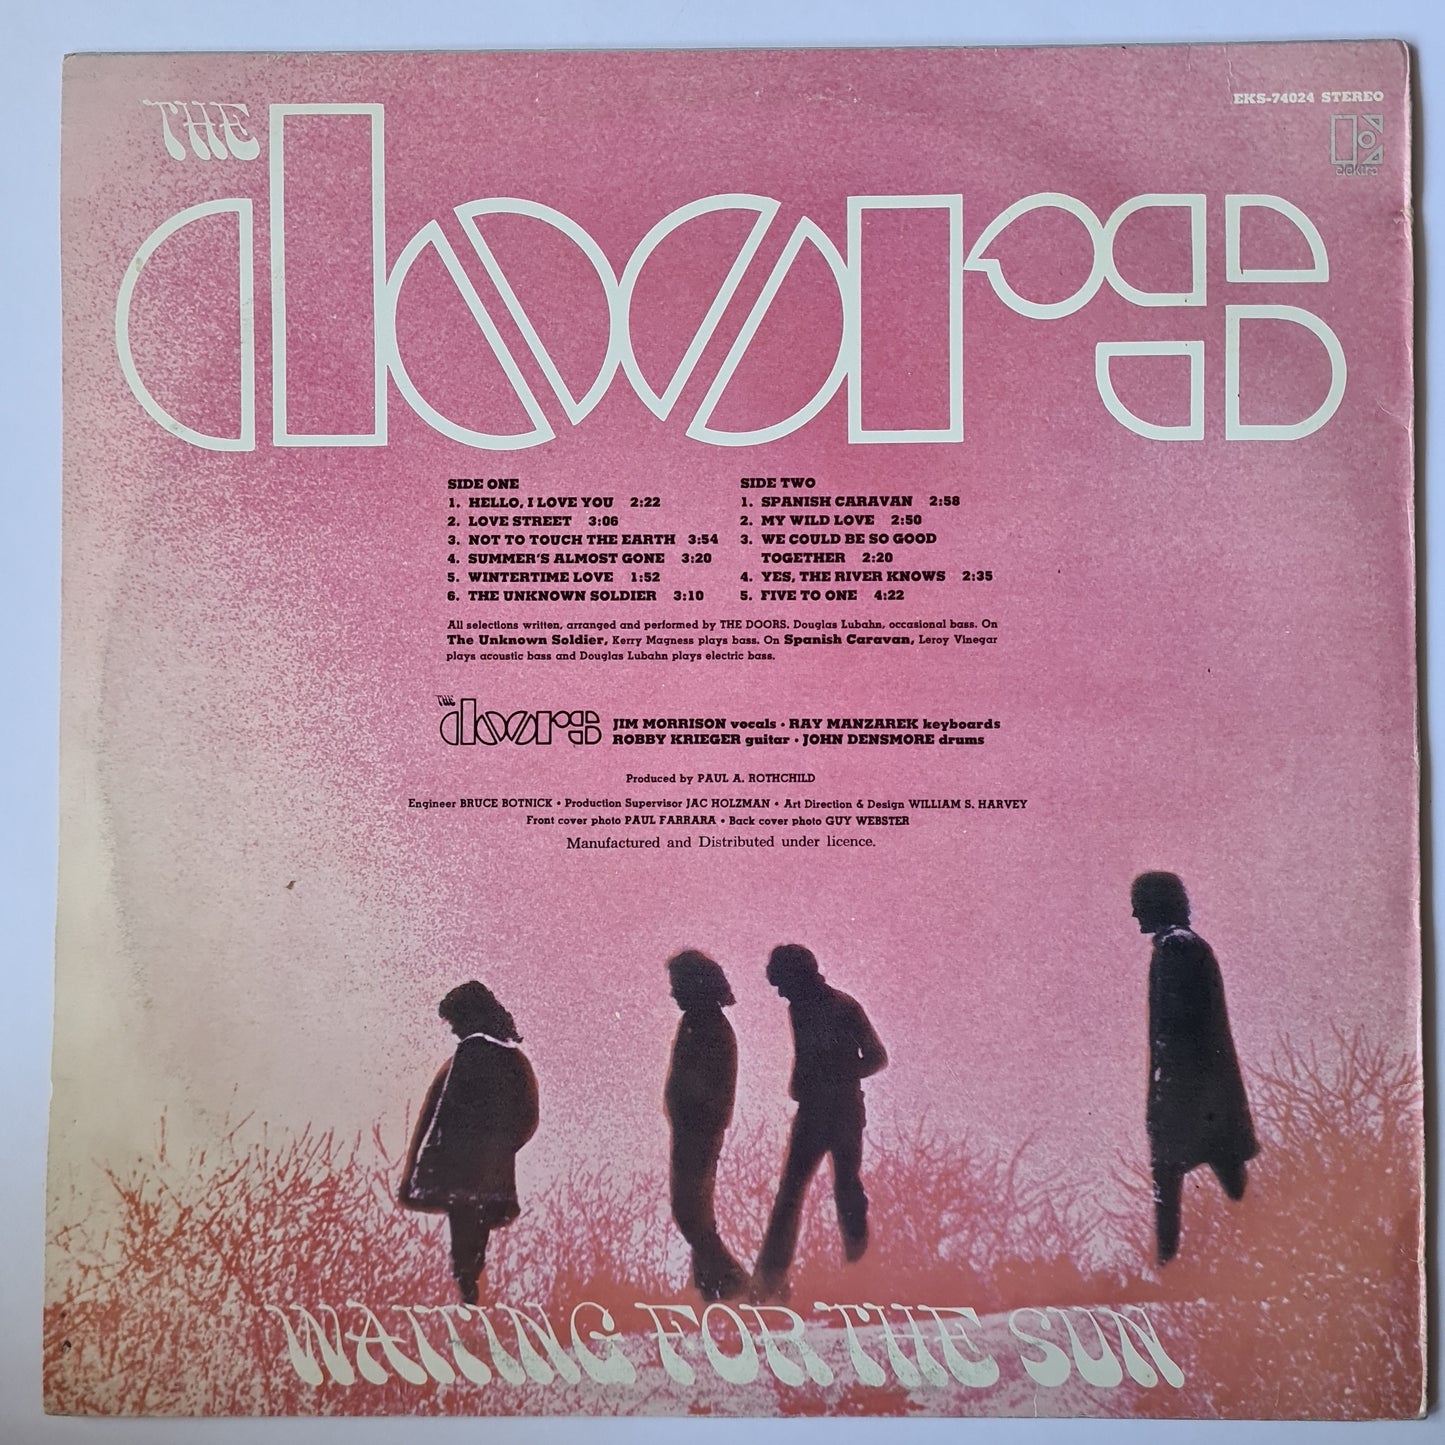 The Doors – Waiting For The Sun - 1968 (70's Australian repress)